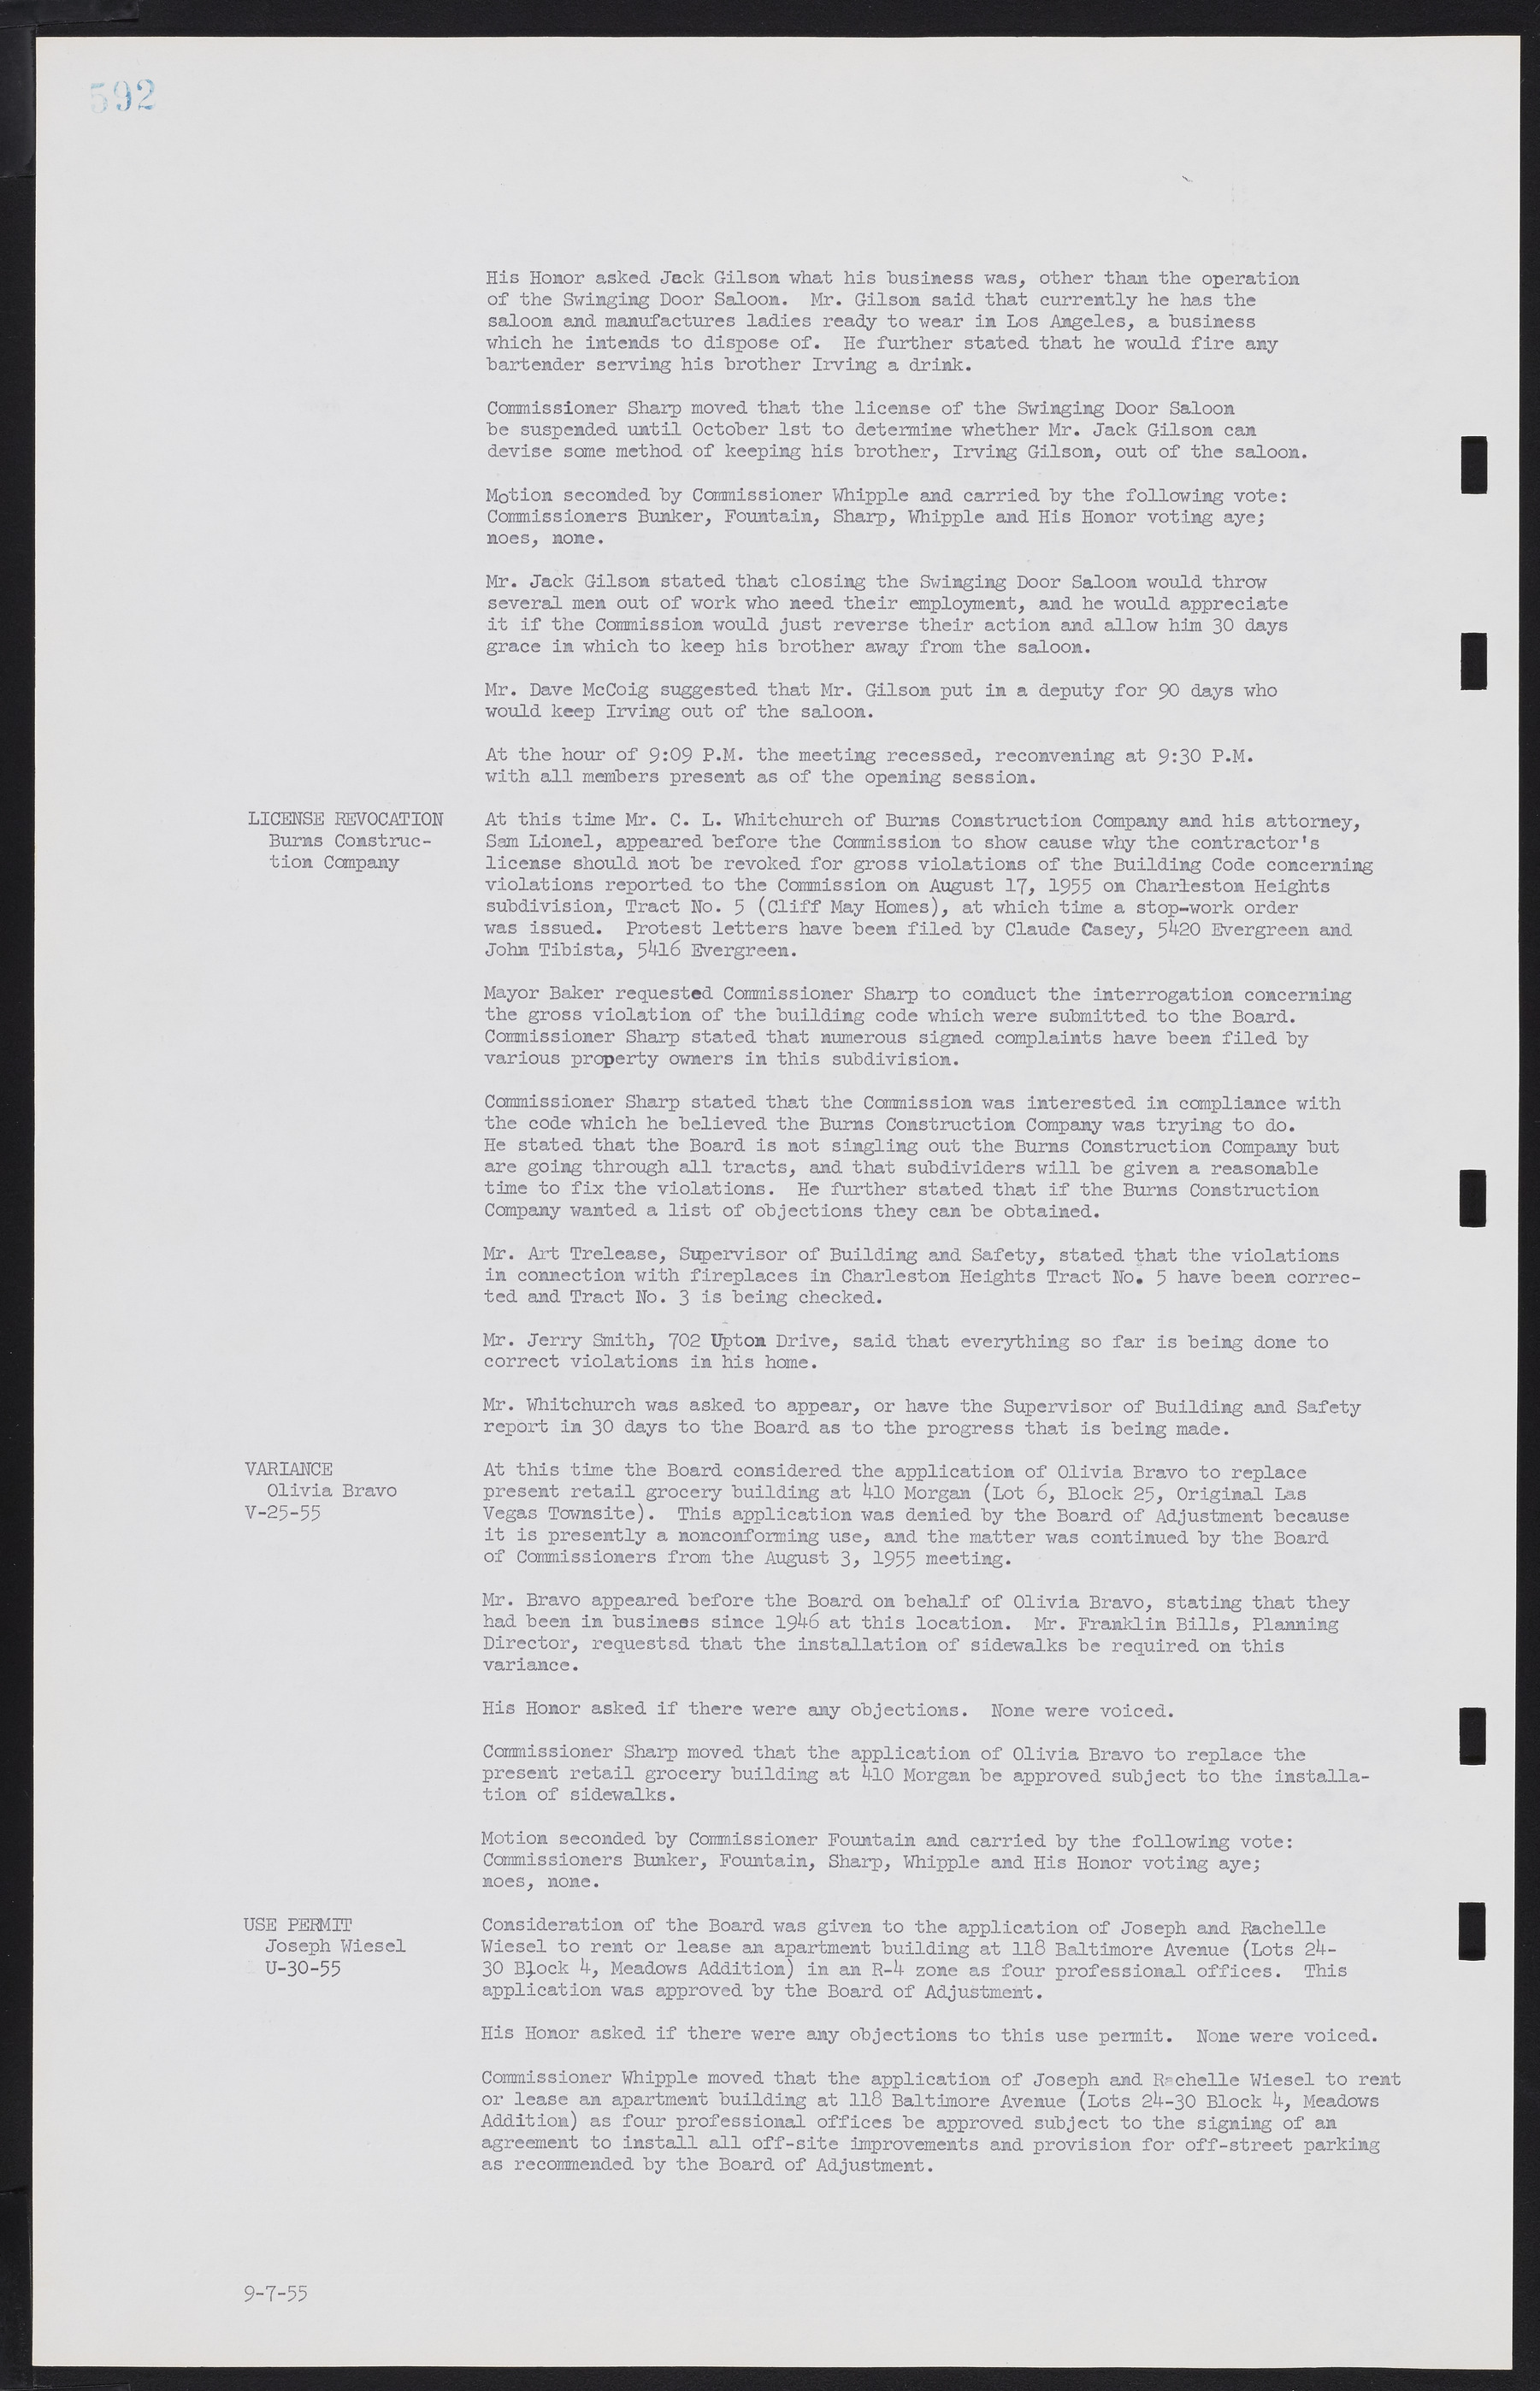 Las Vegas City Commission Minutes, February 17, 1954 to September 21, 1955, lvc000009-598